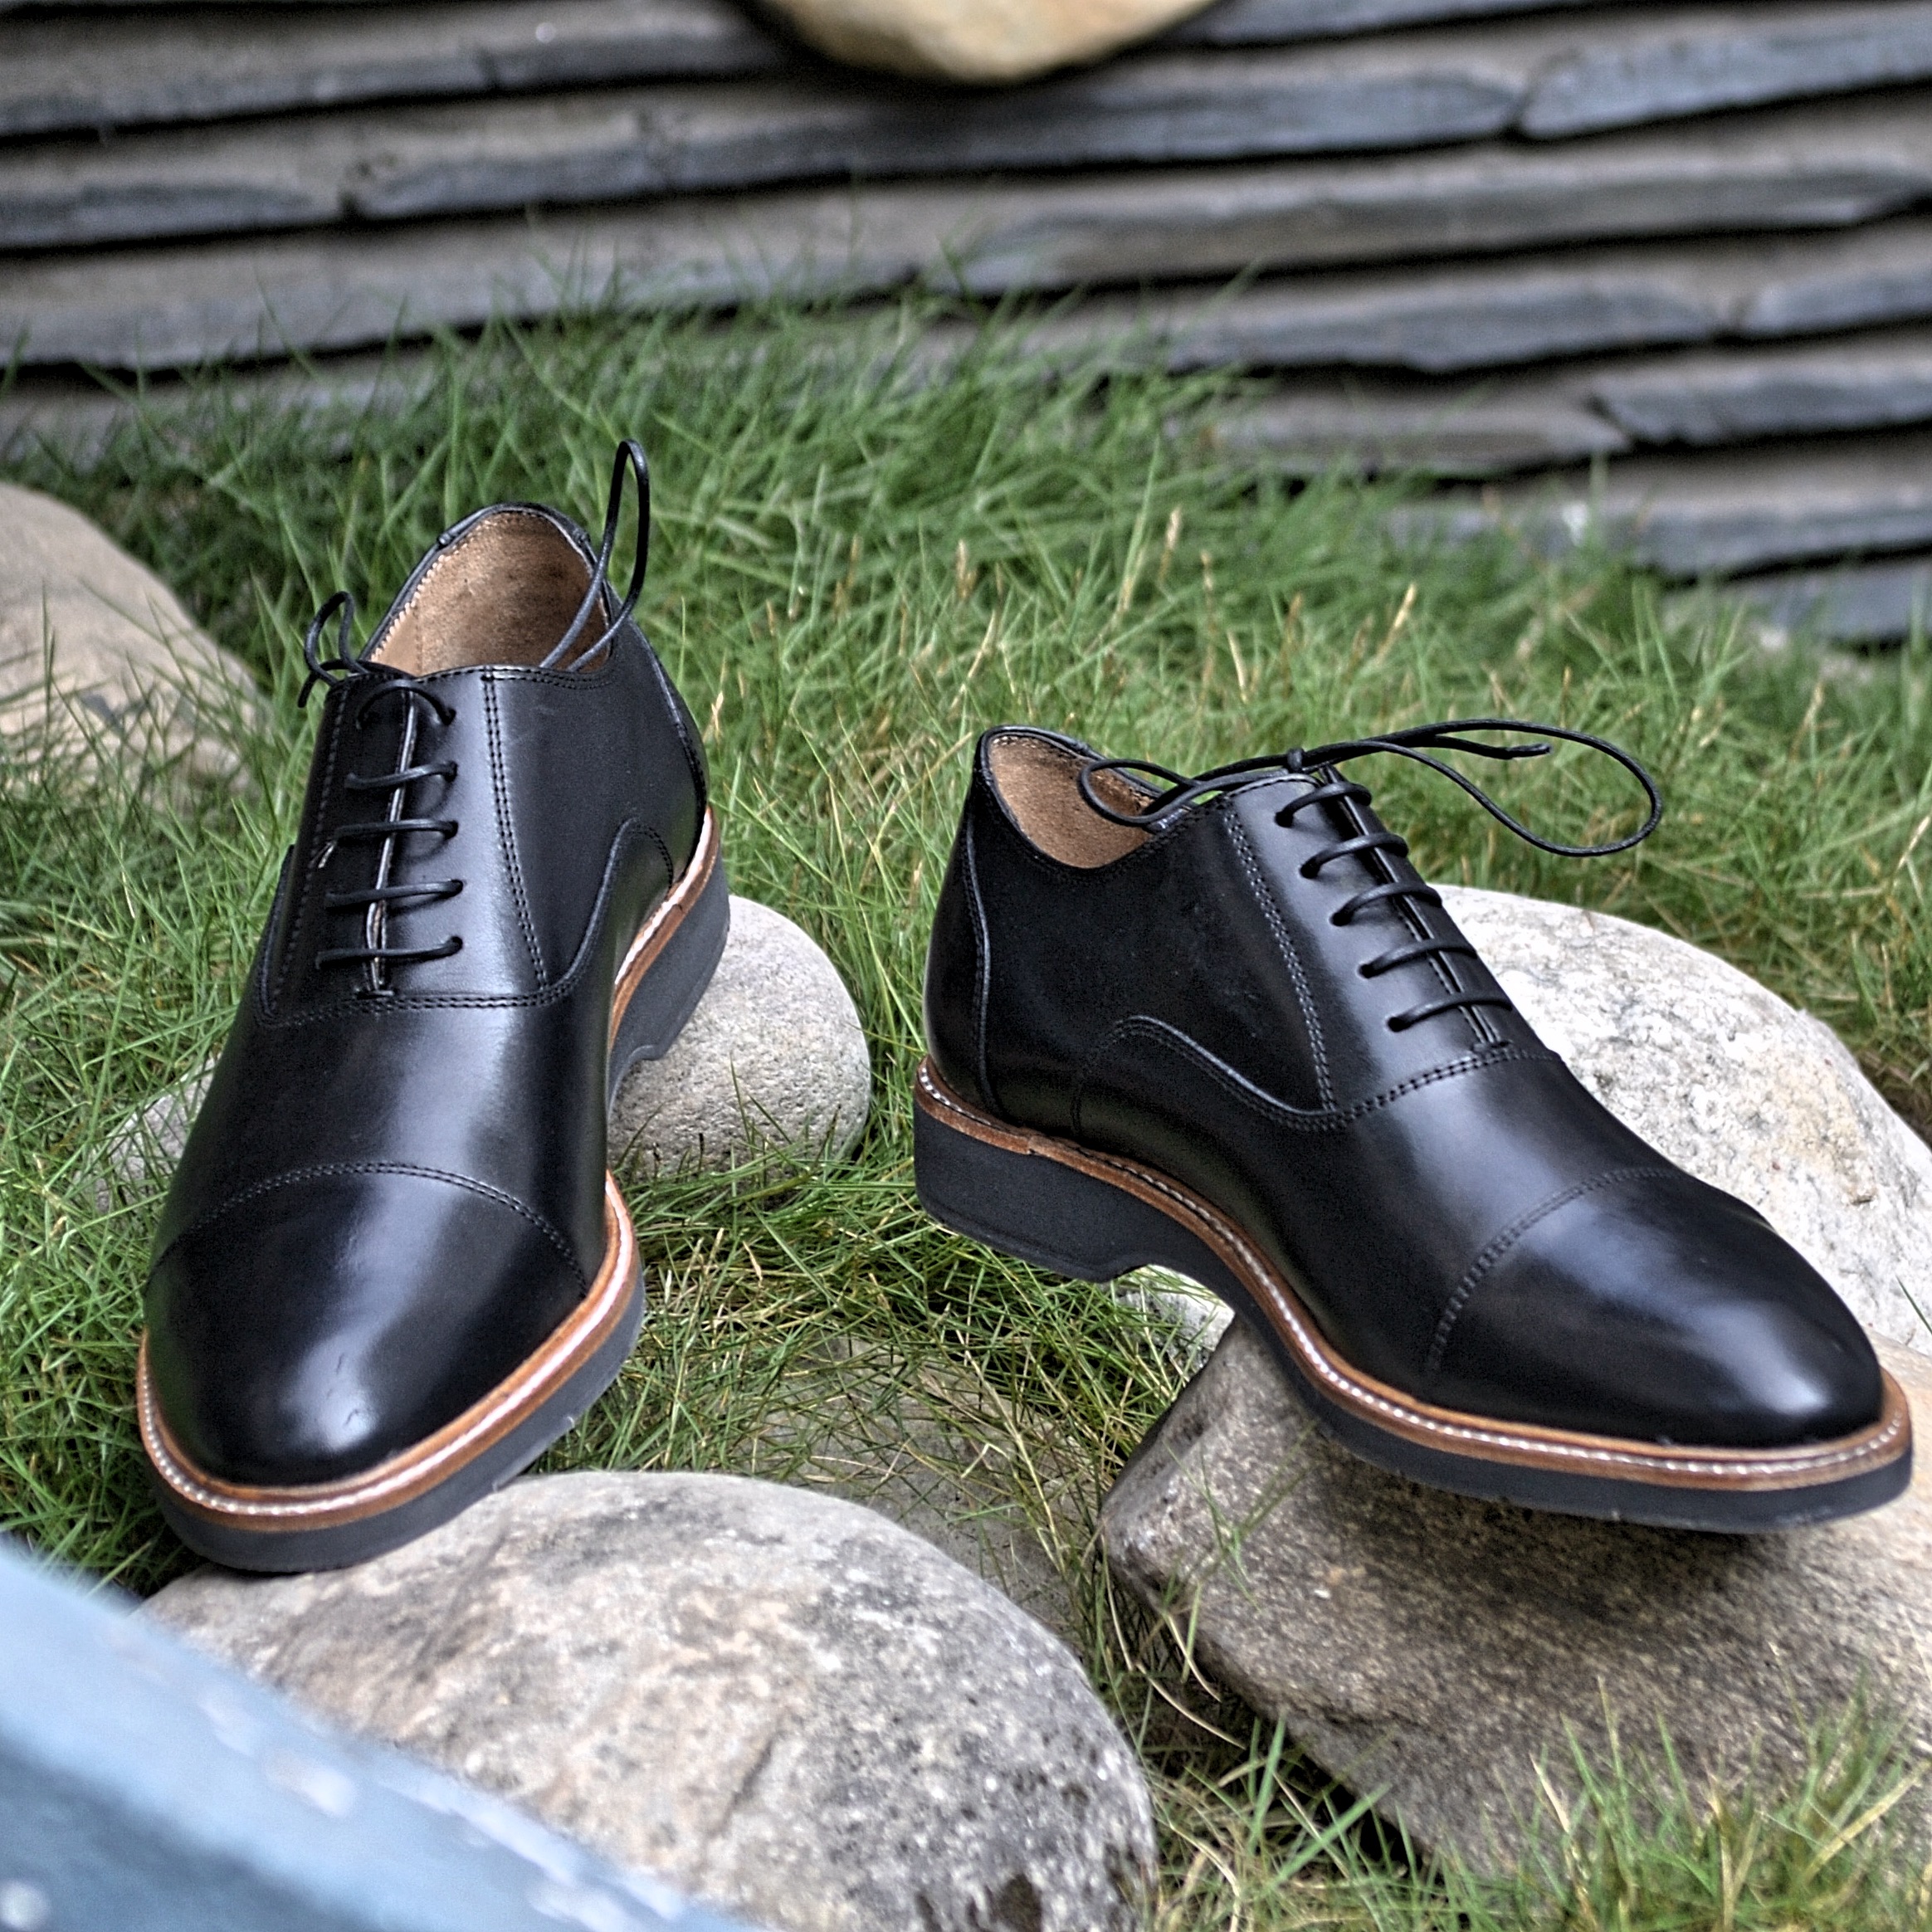 Rhinoland CH Black Formal shoes for men